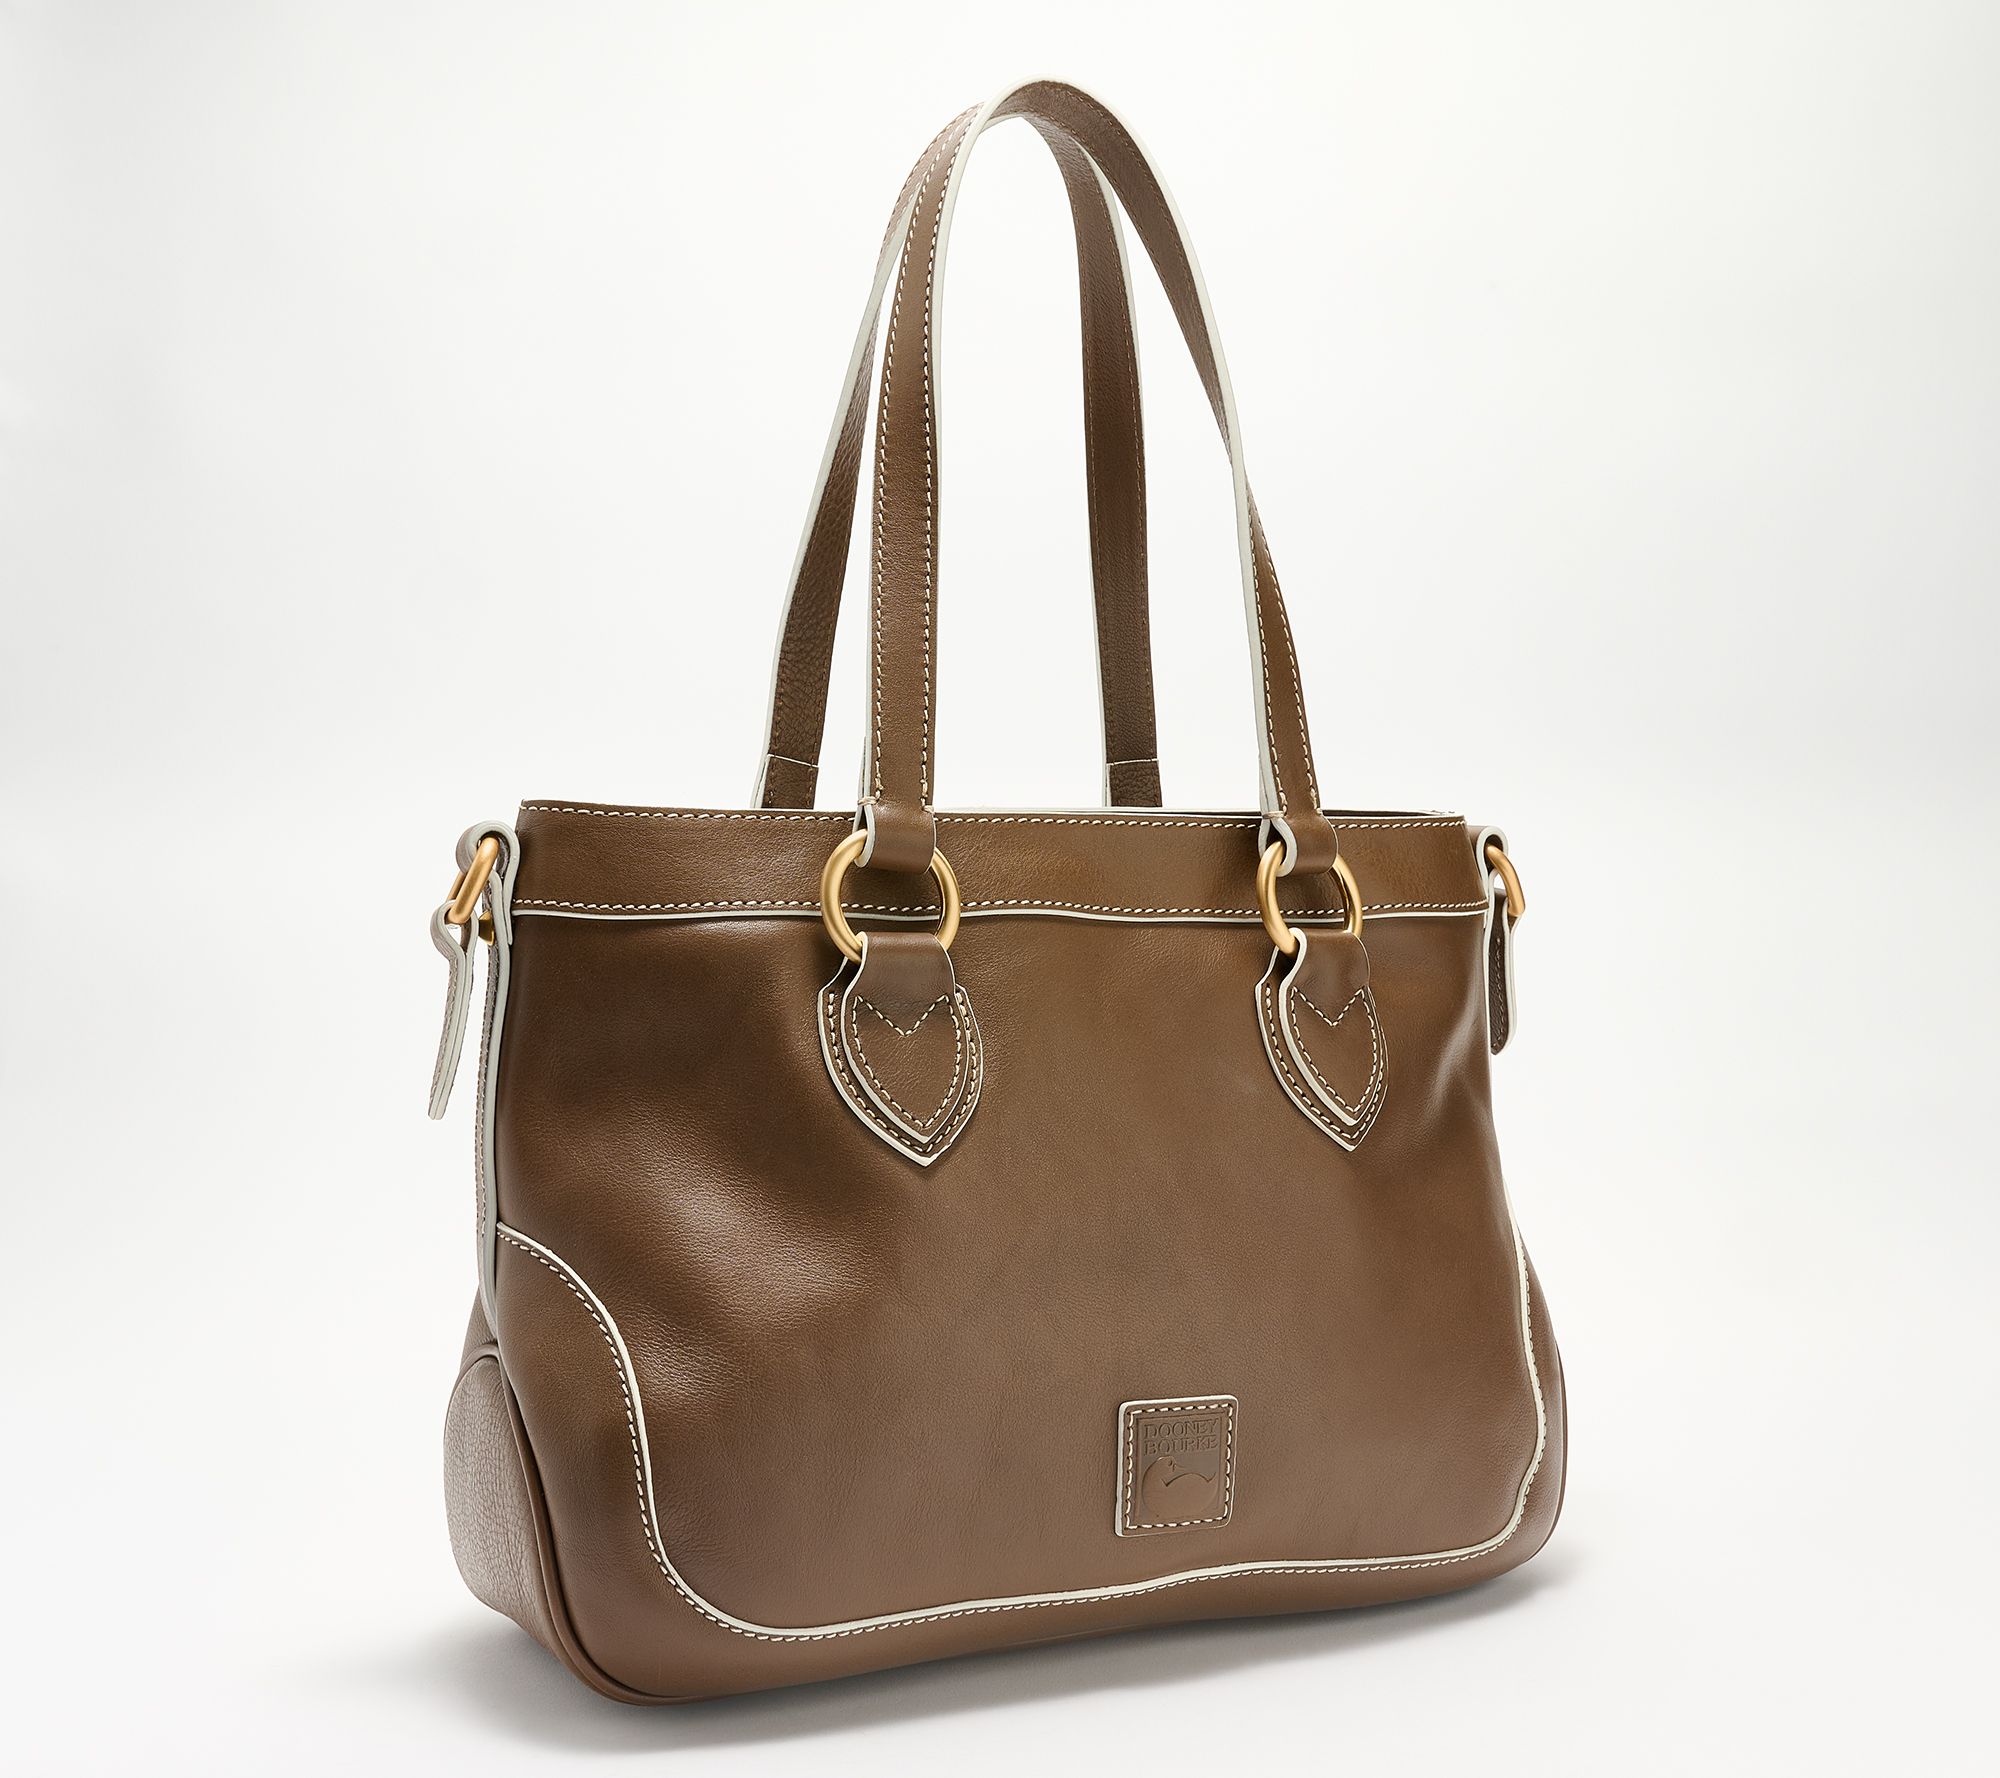 Dooney & Bourke Florentine Leather Shopper Bag - QVC.com